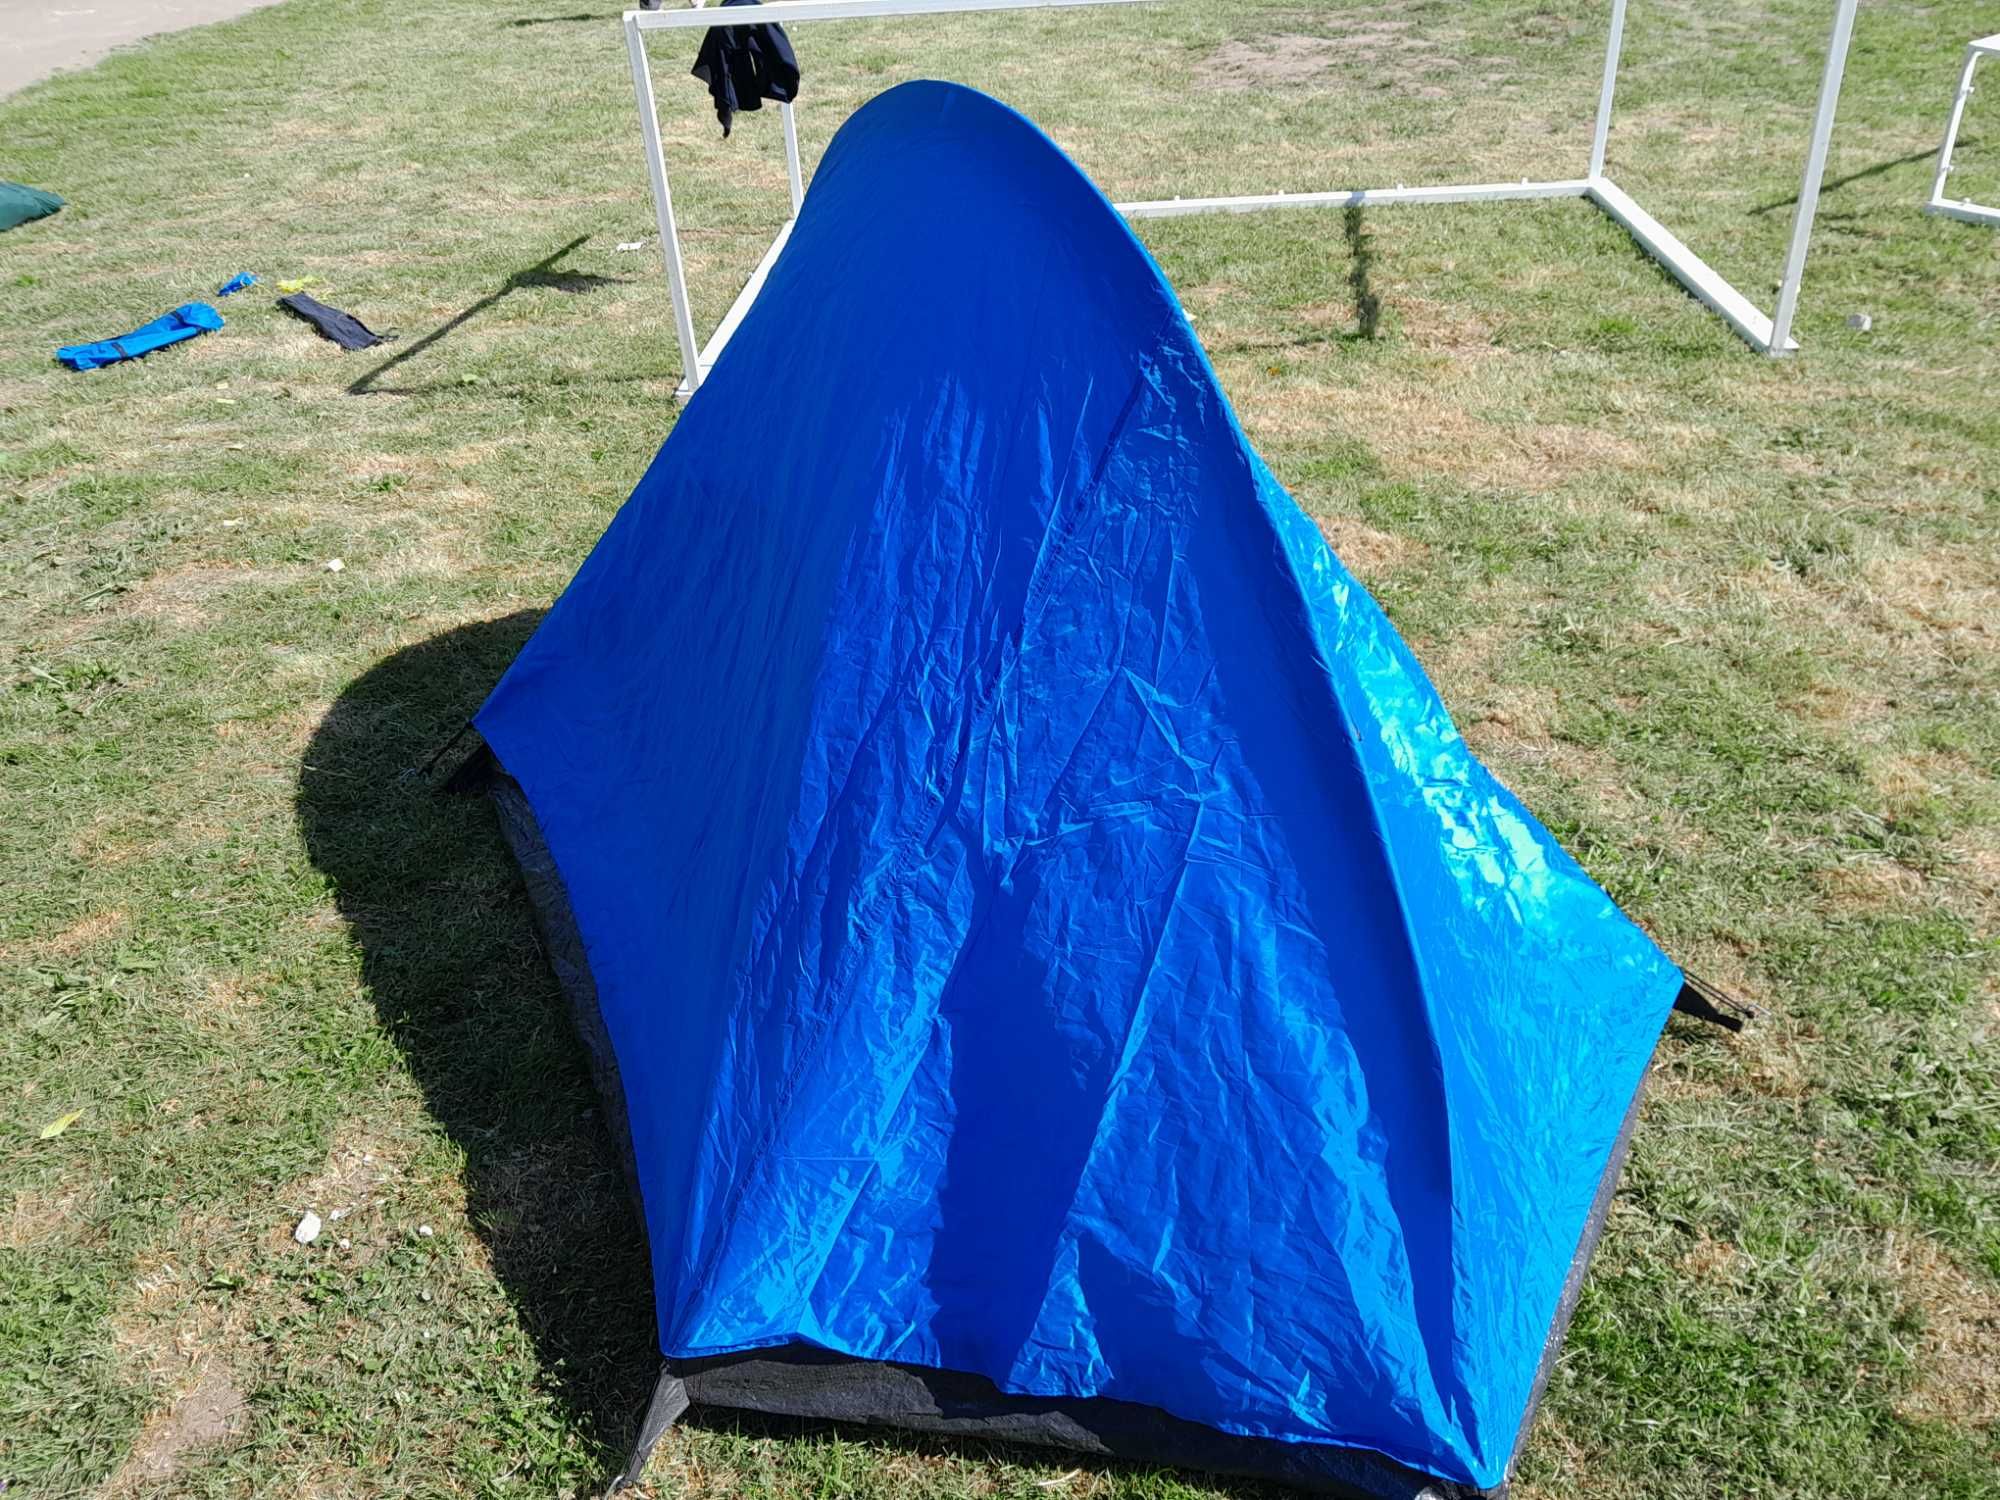 mckinley bike 2 палатка намет